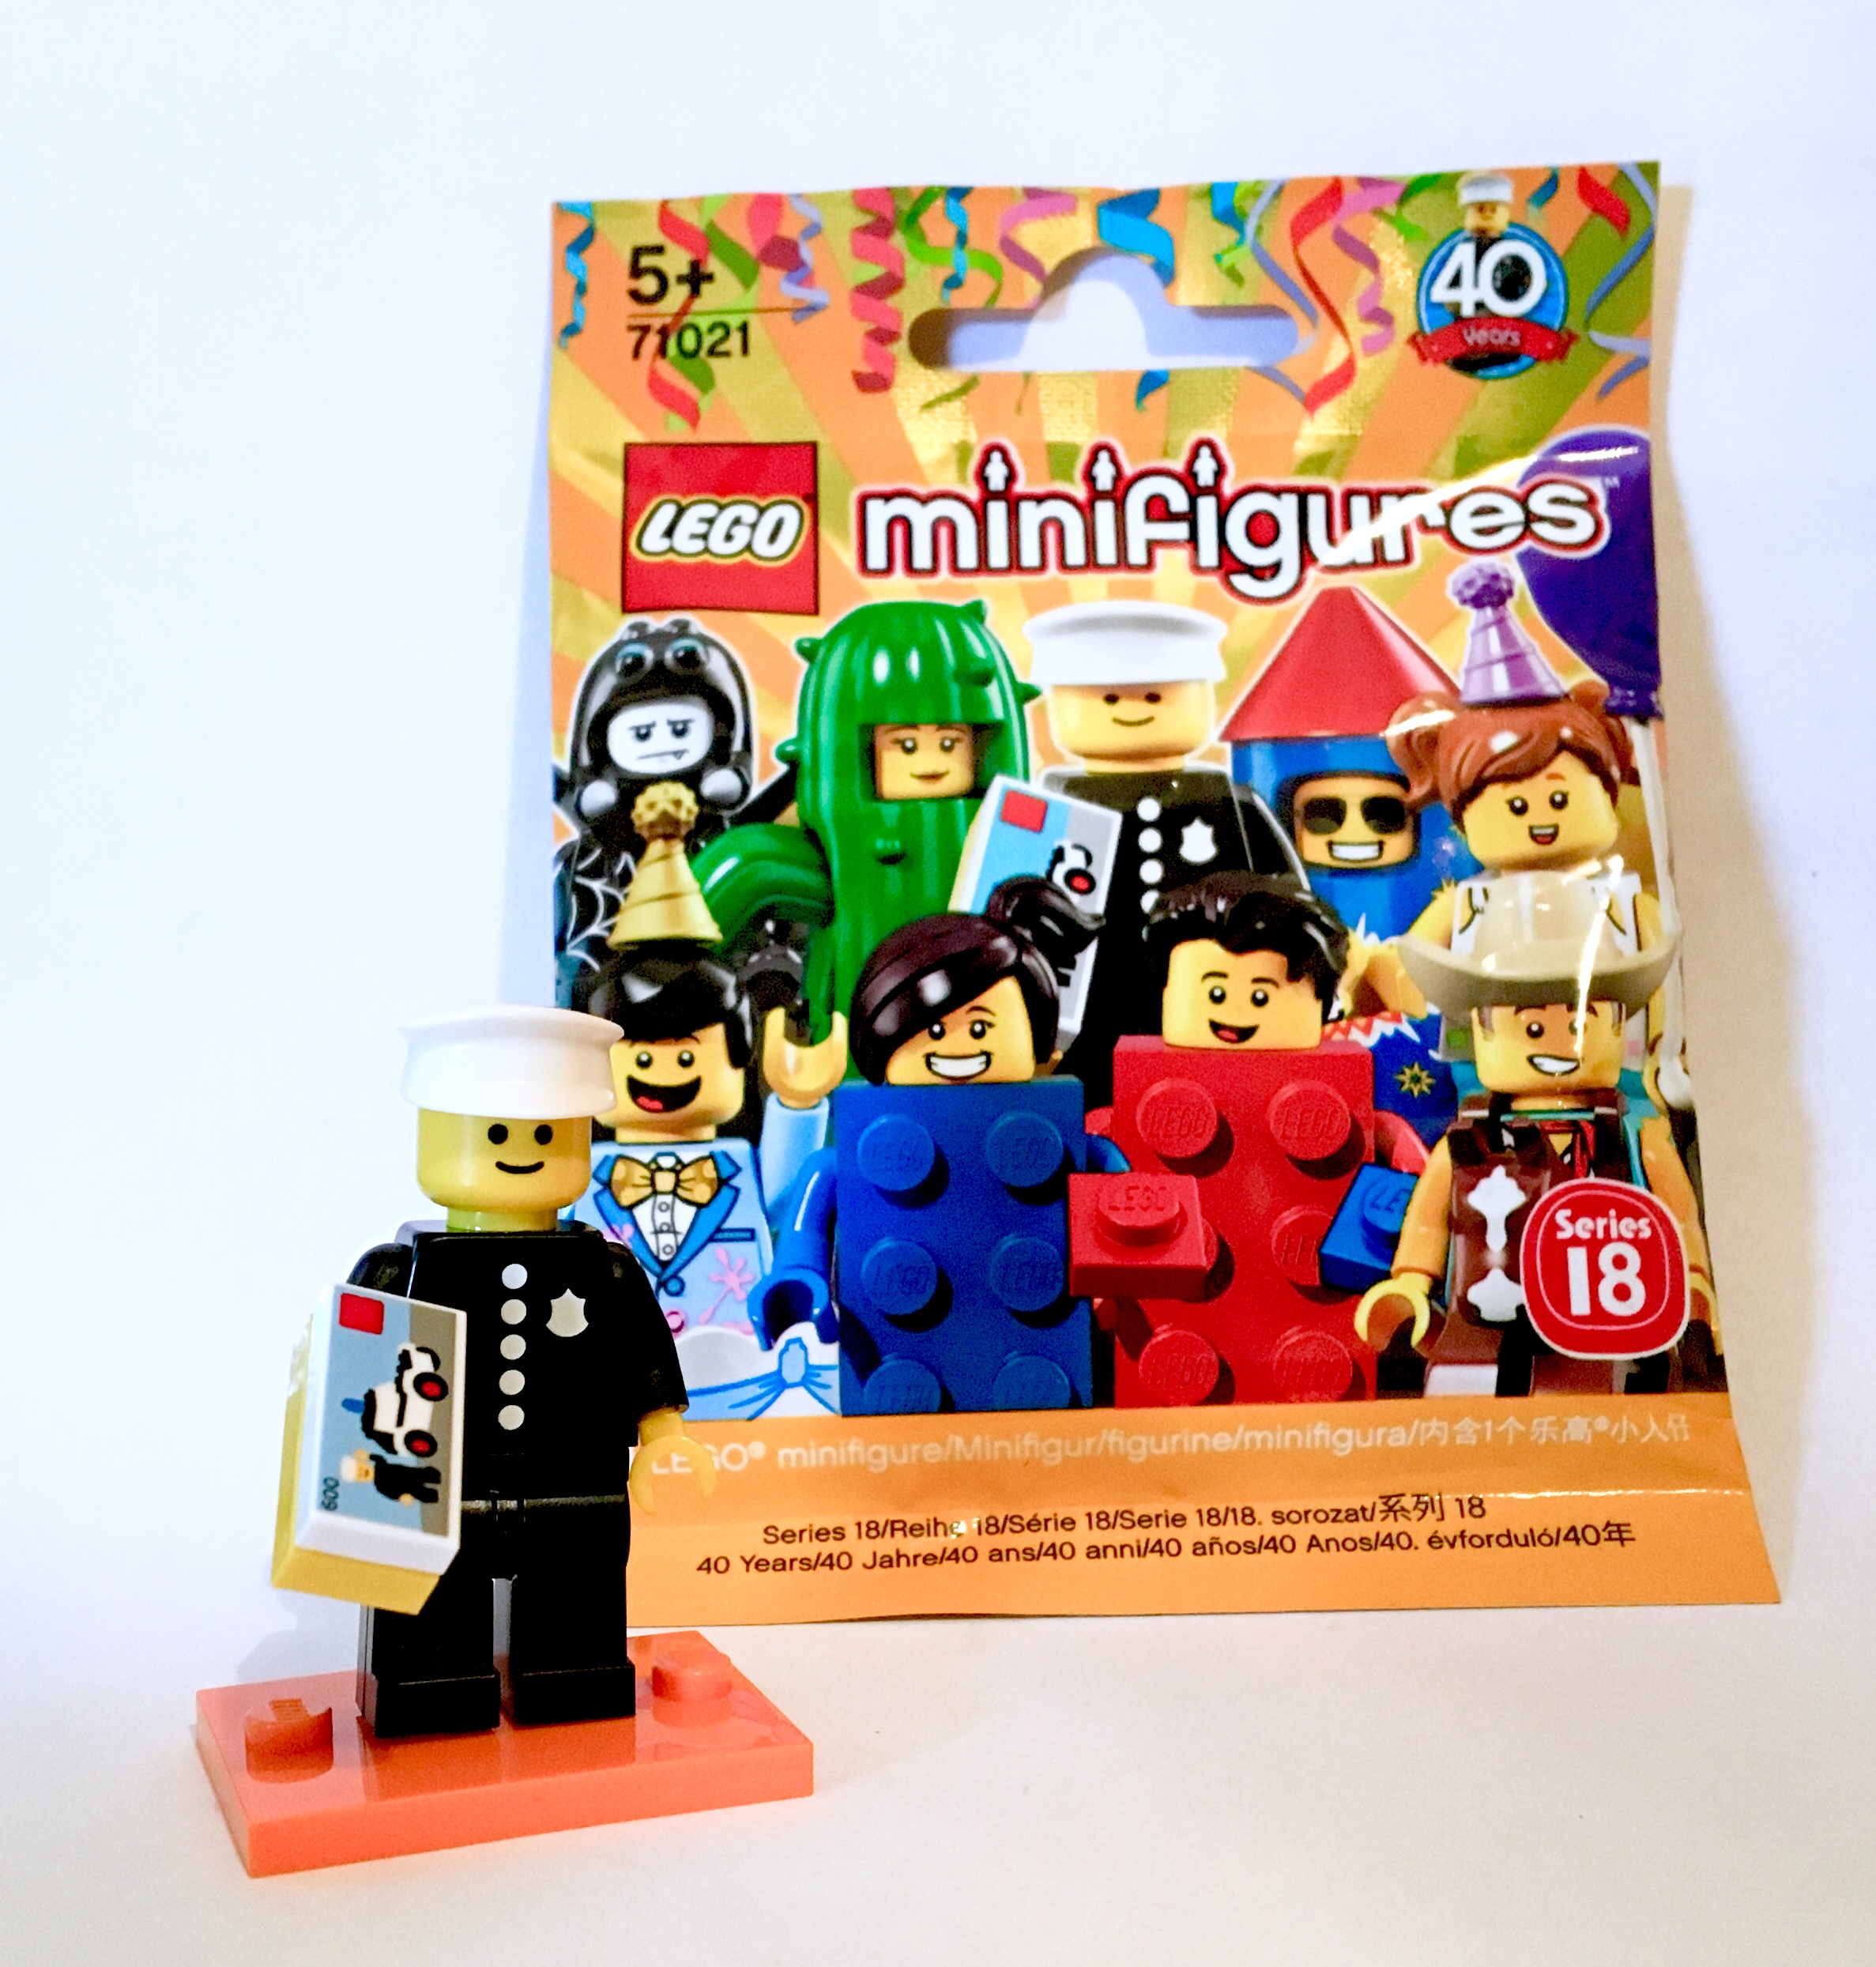 LEGO Marvel Minifigures Series 71031 Figures Blind Bags Revealed  Marvel  Toy News